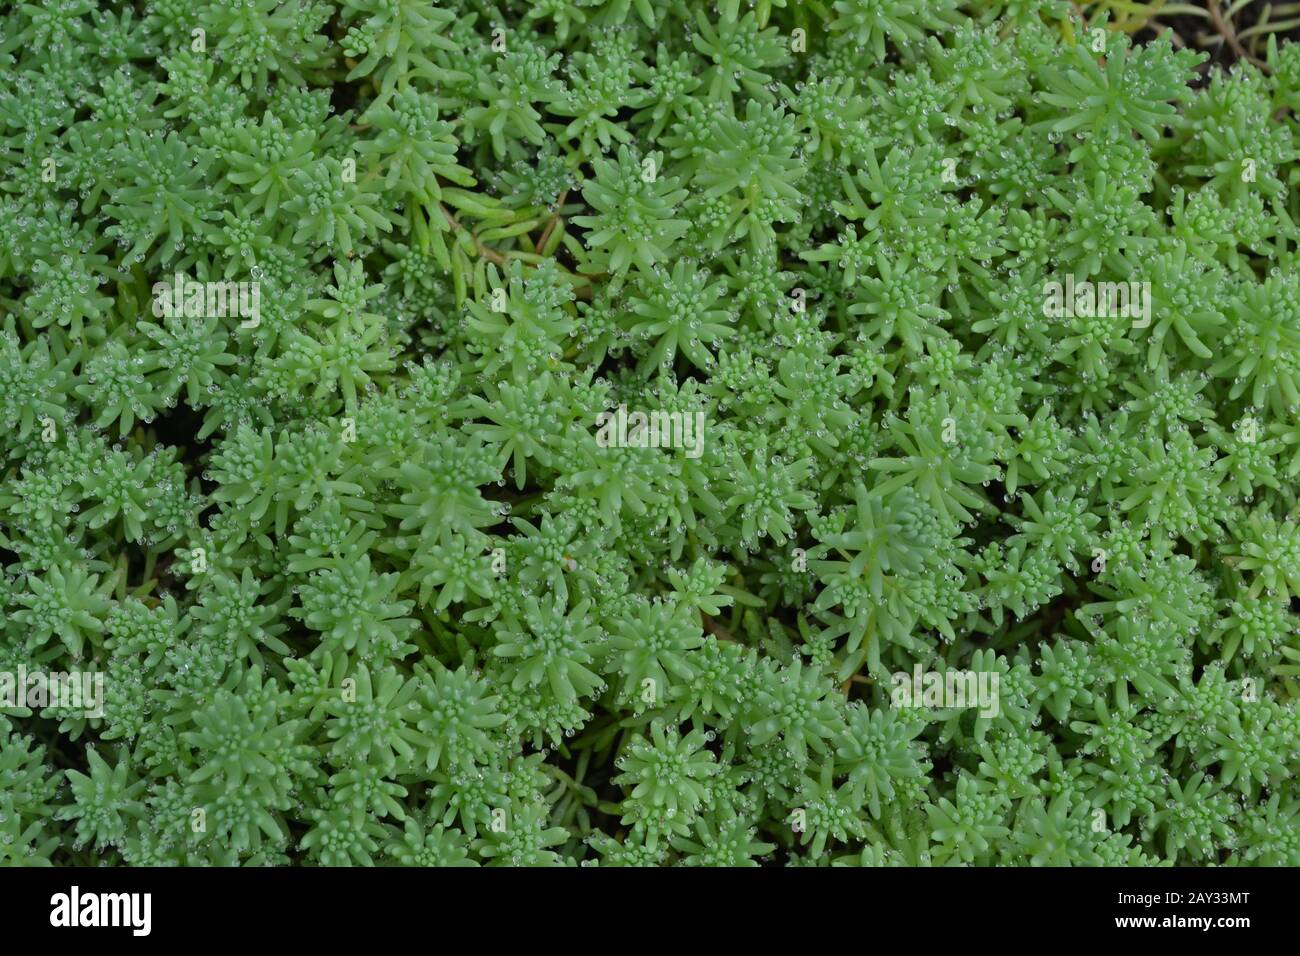 Stonecrop. Hare cabbage. Sedum. Green moss. Decorative grassy carpet. Flowerbed, garden. Horizontal photo Stock Photo